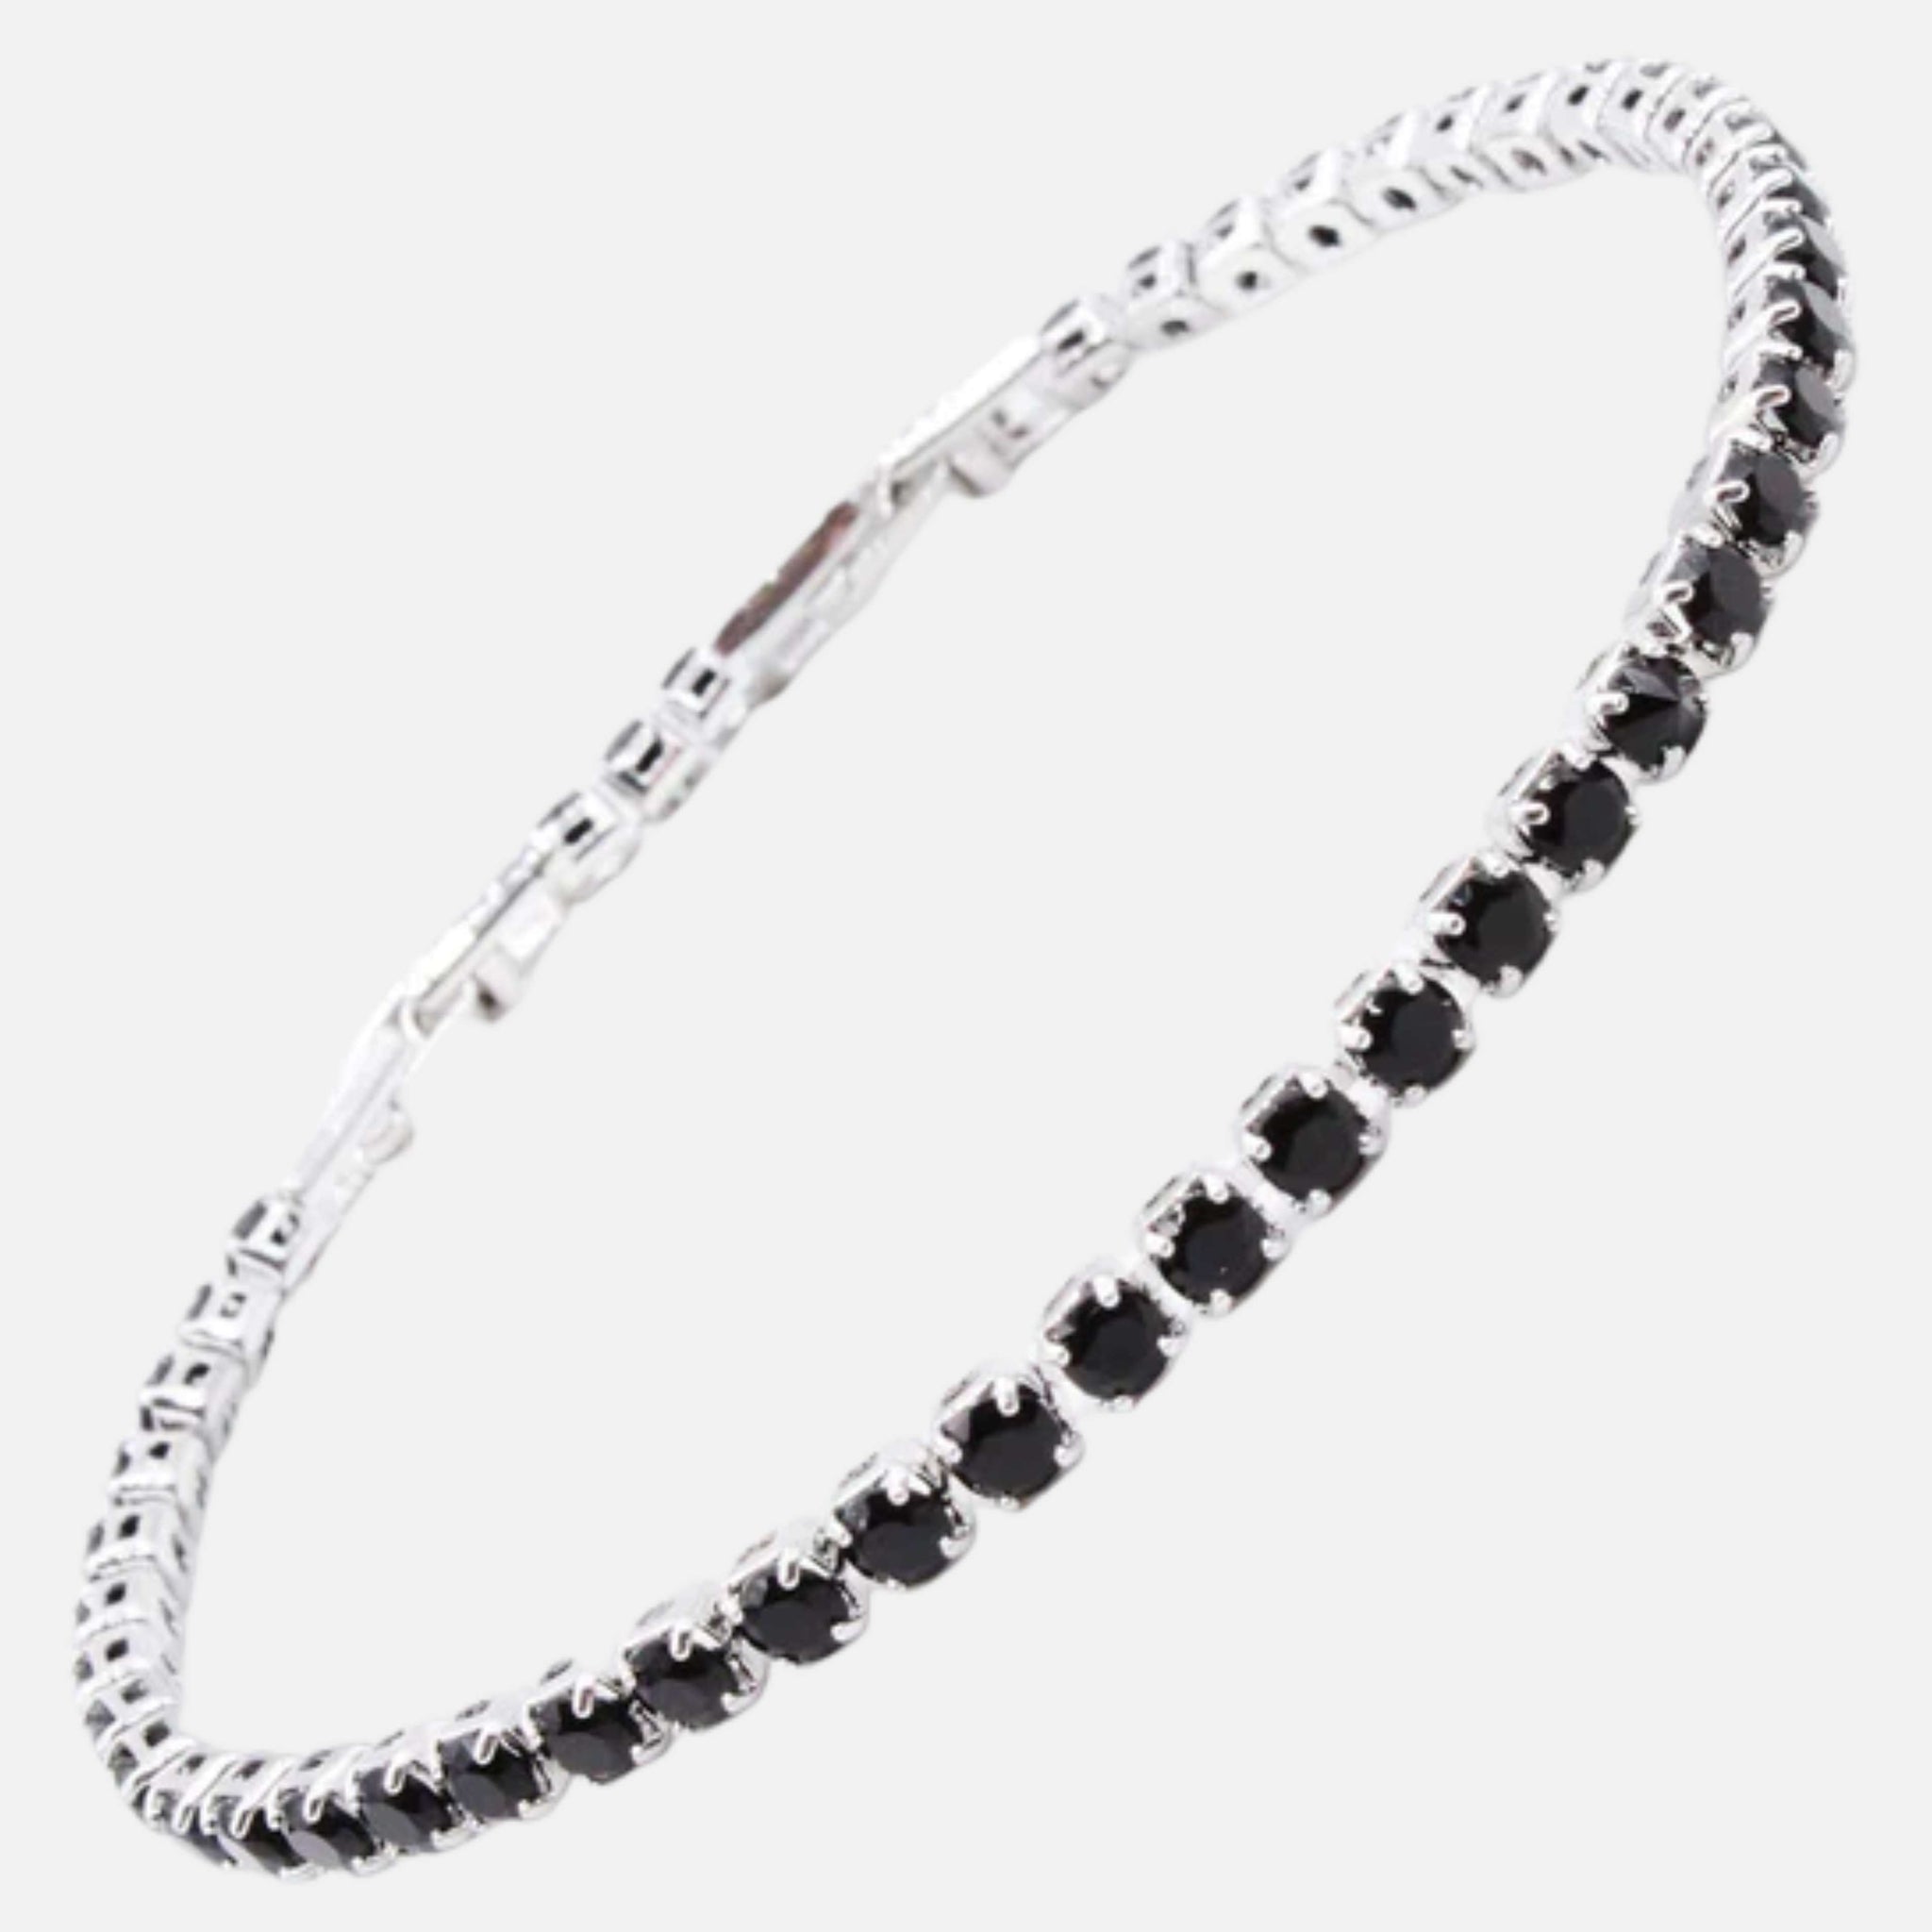 Tennis bracelet with 2mm black crystals